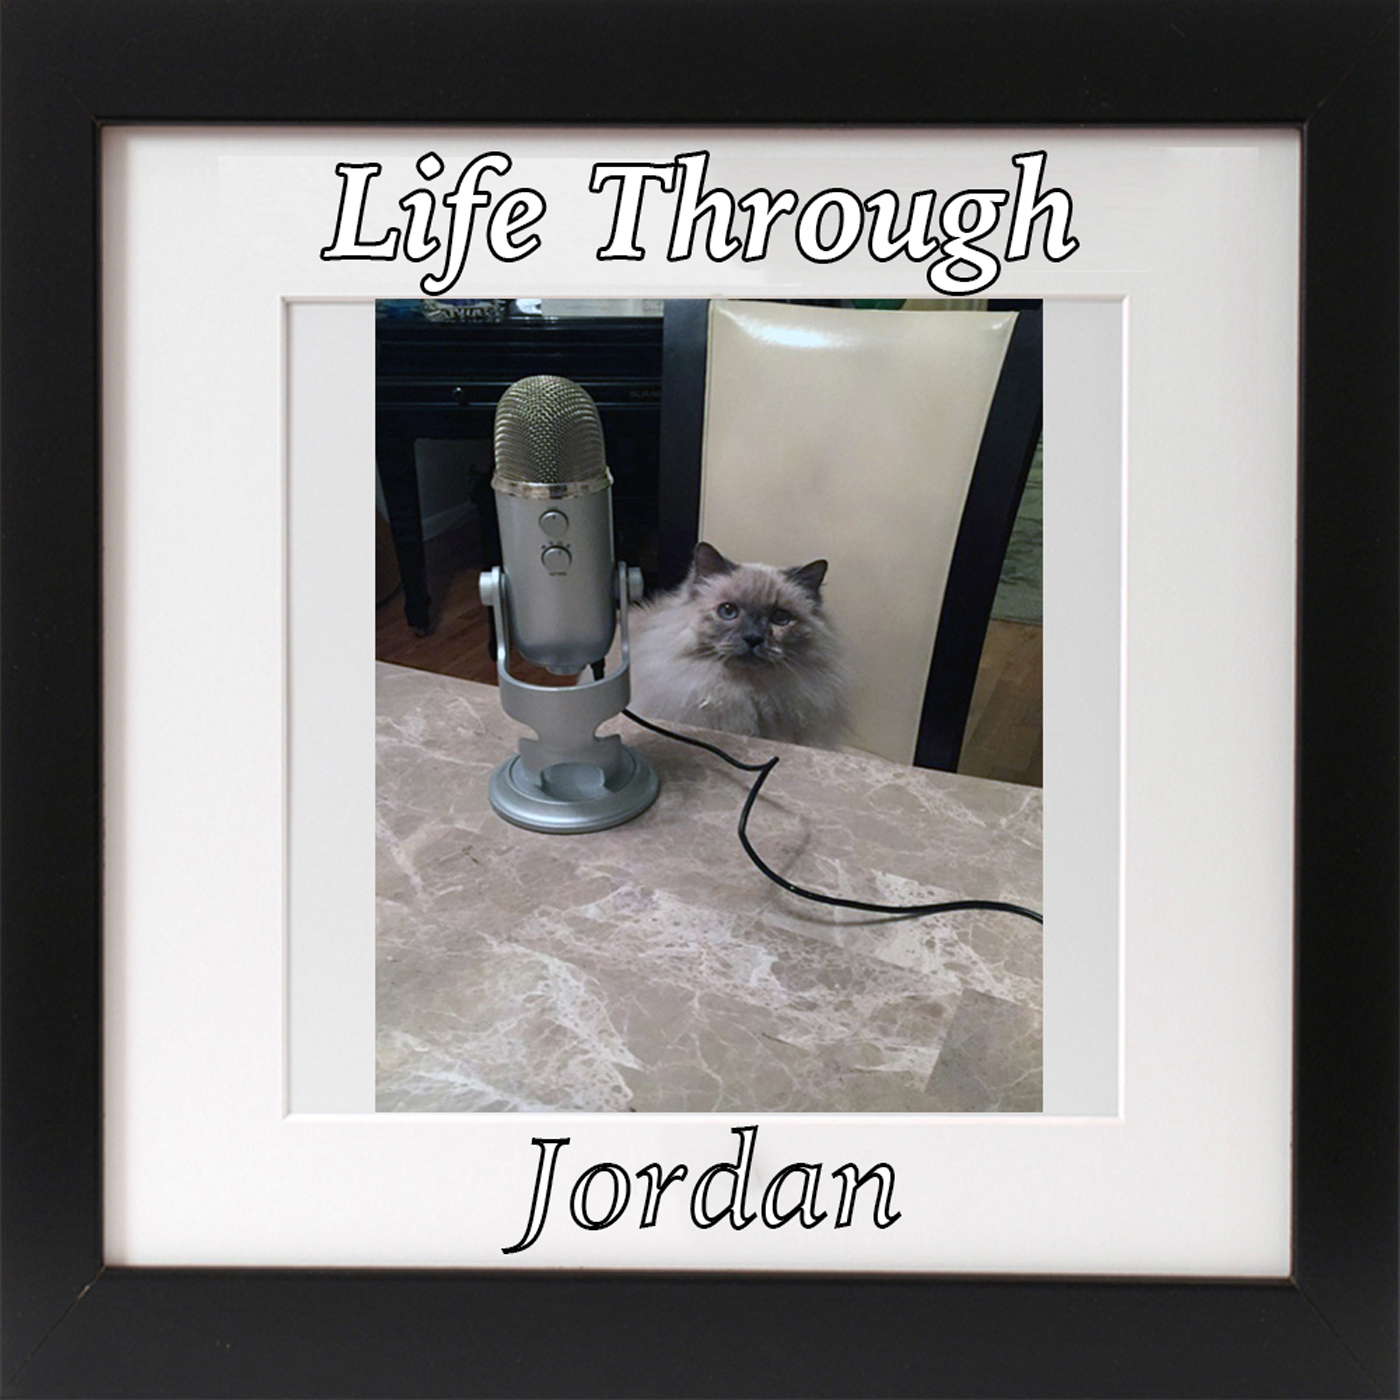 Life Through Jordan